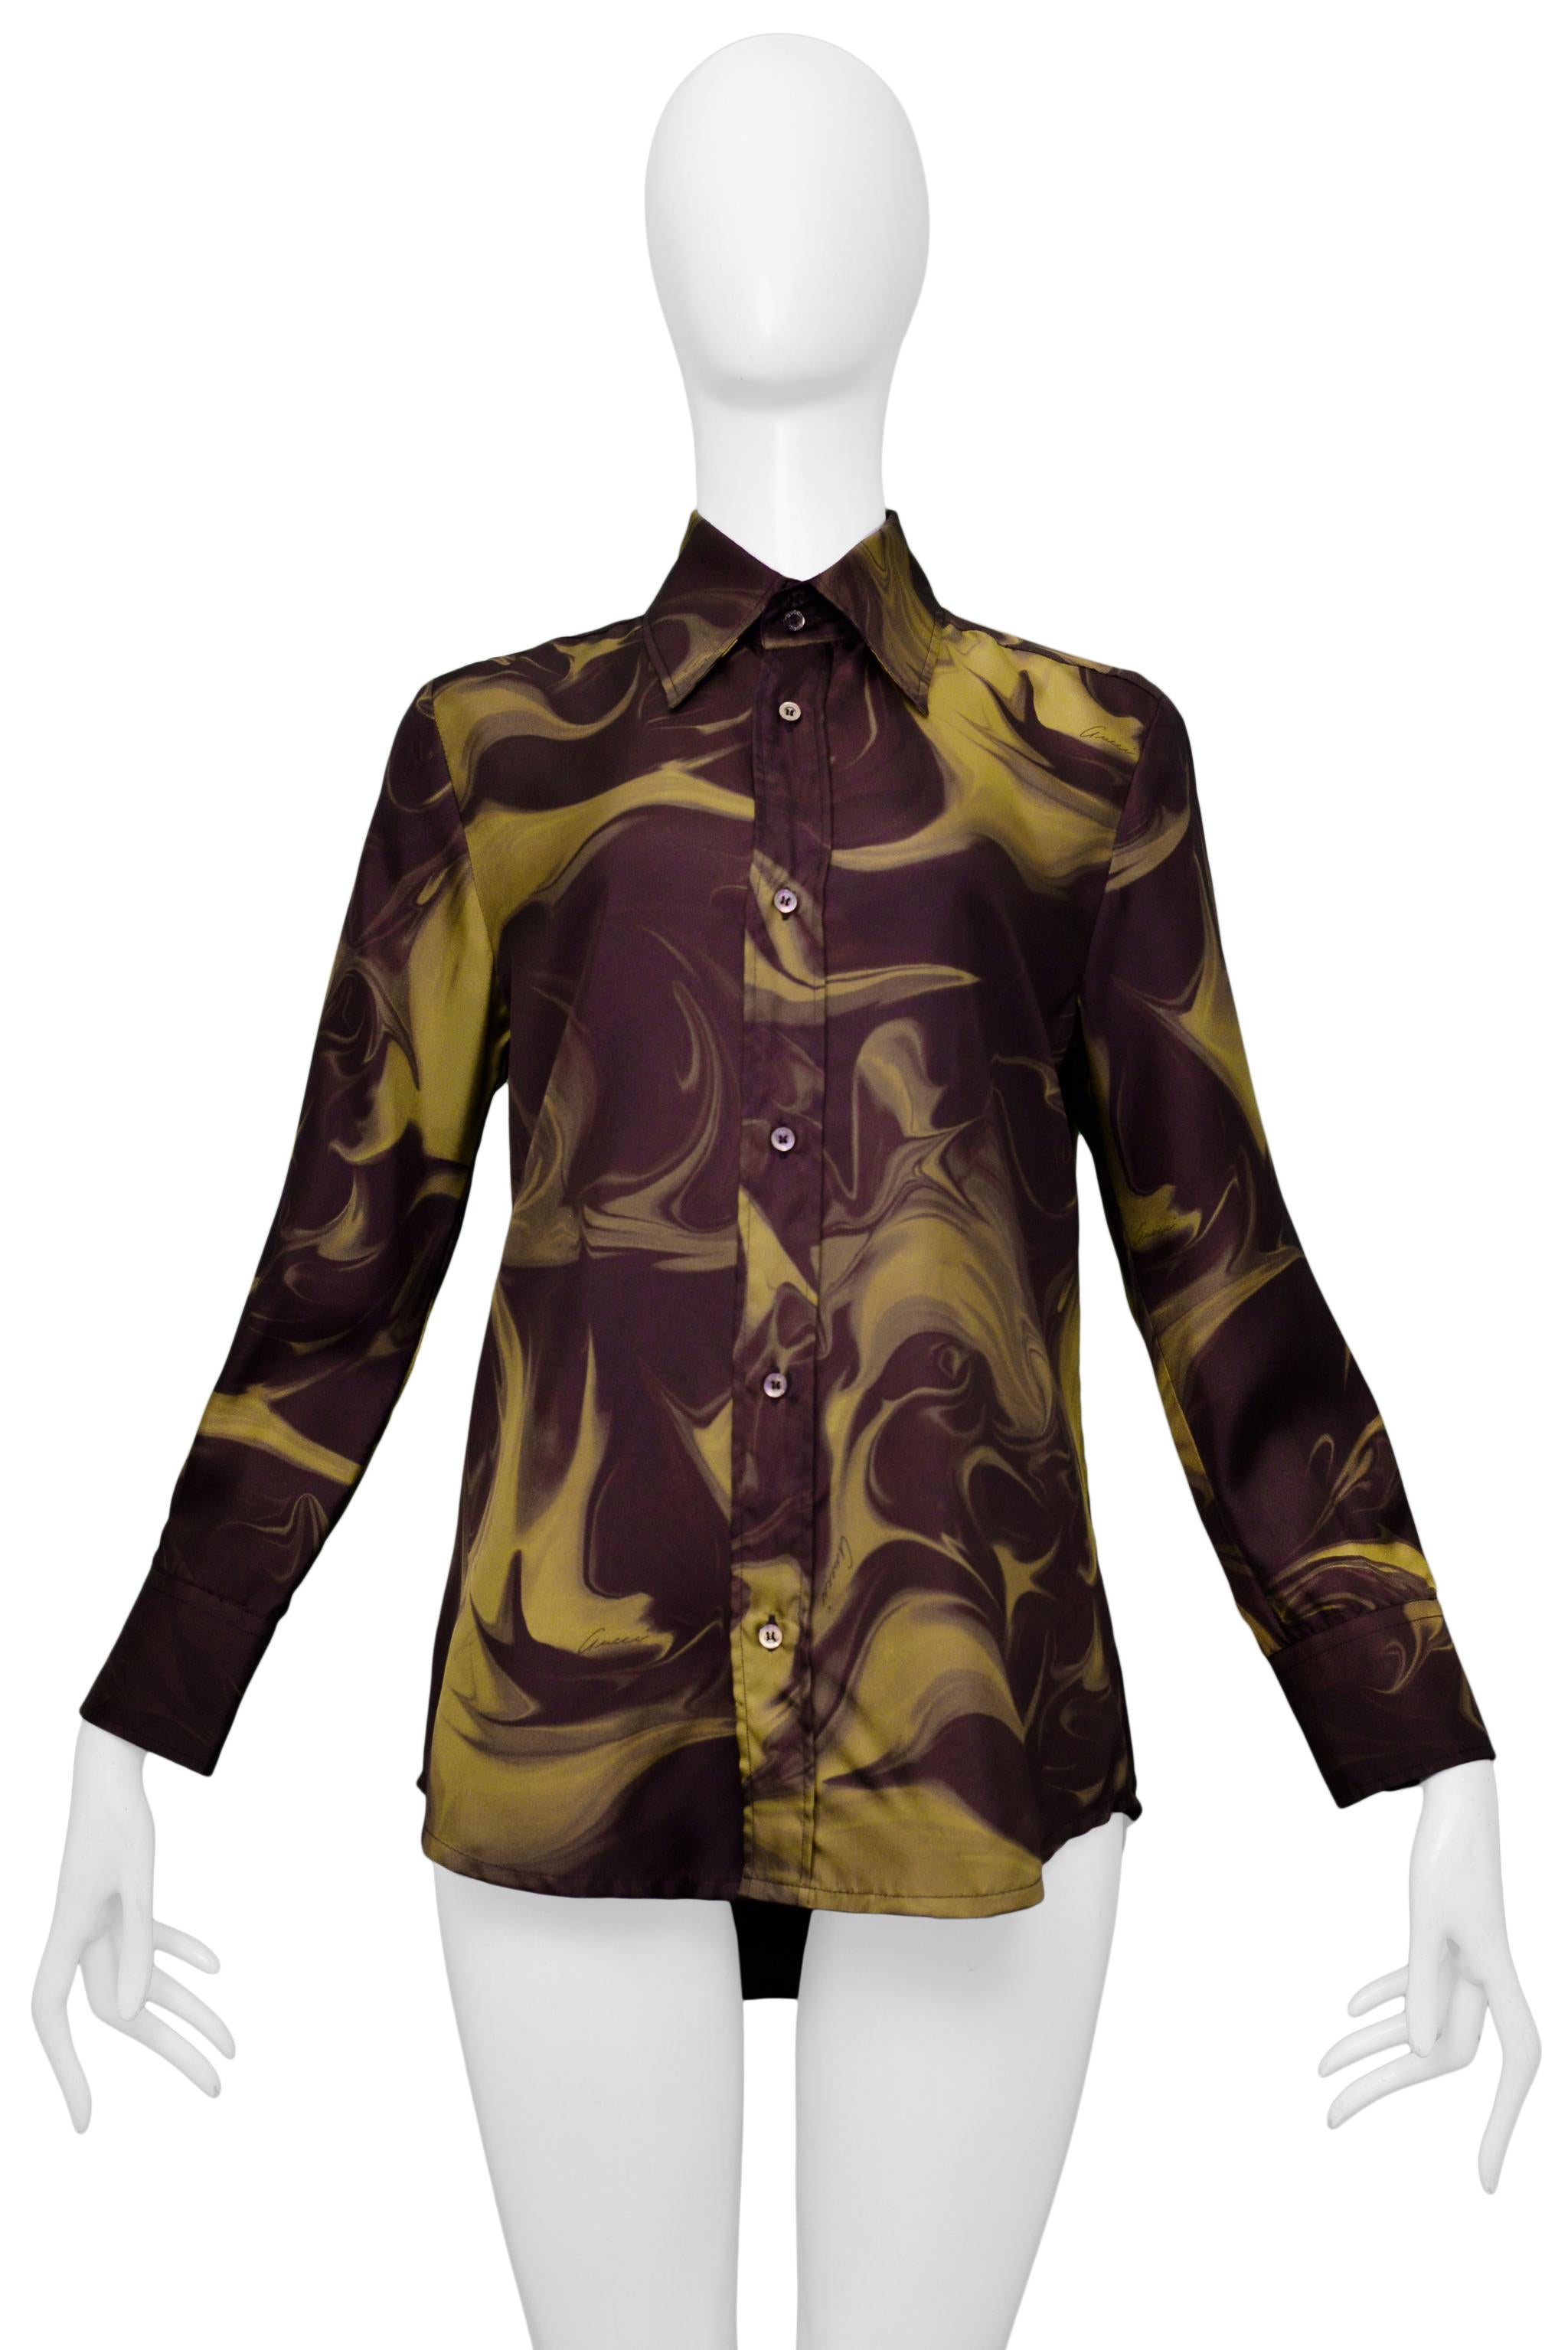 Black Gucci by Tom Ford Marble Print Dress Shirt 2001